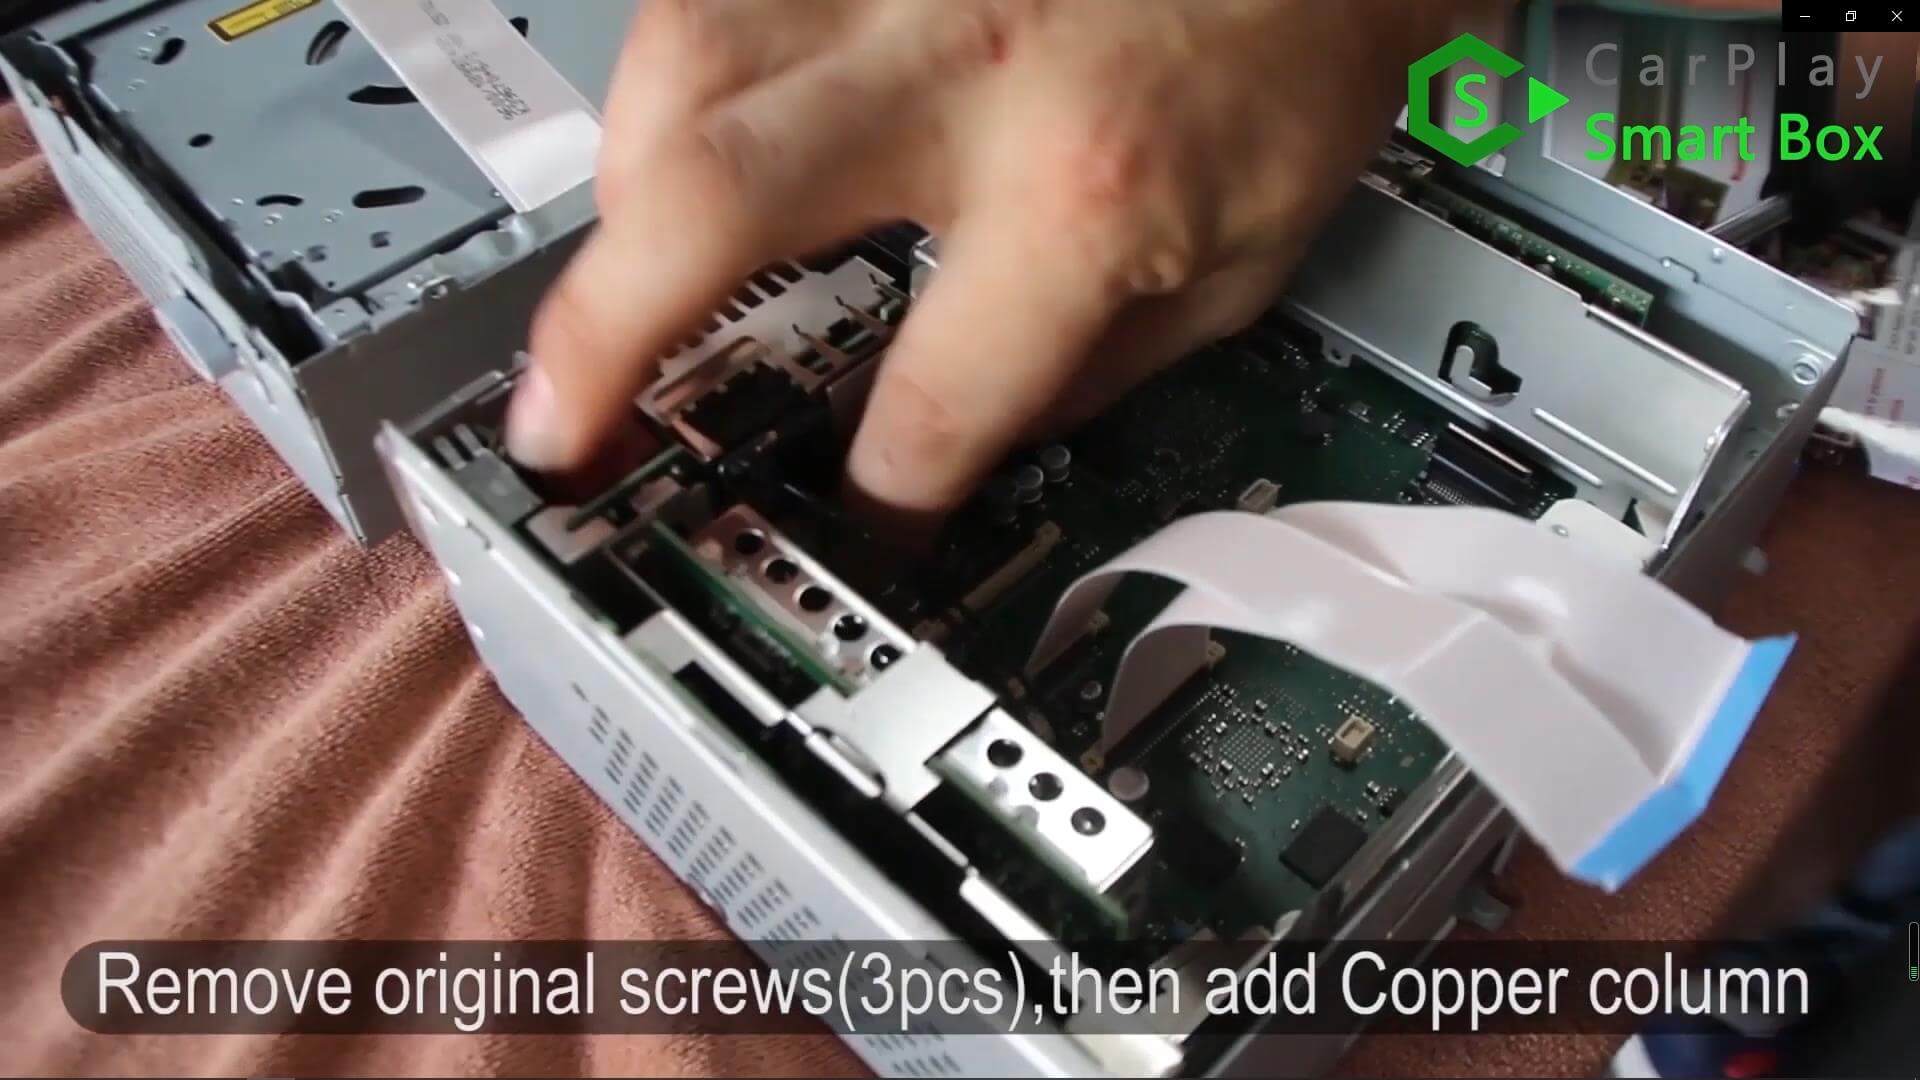 4. Remove original screws (3pcs), then add copper column - Wireless Apple CarPlay Smart Box for Porsche 911 PCM3.1 Head unit - CarPlay Smart Box